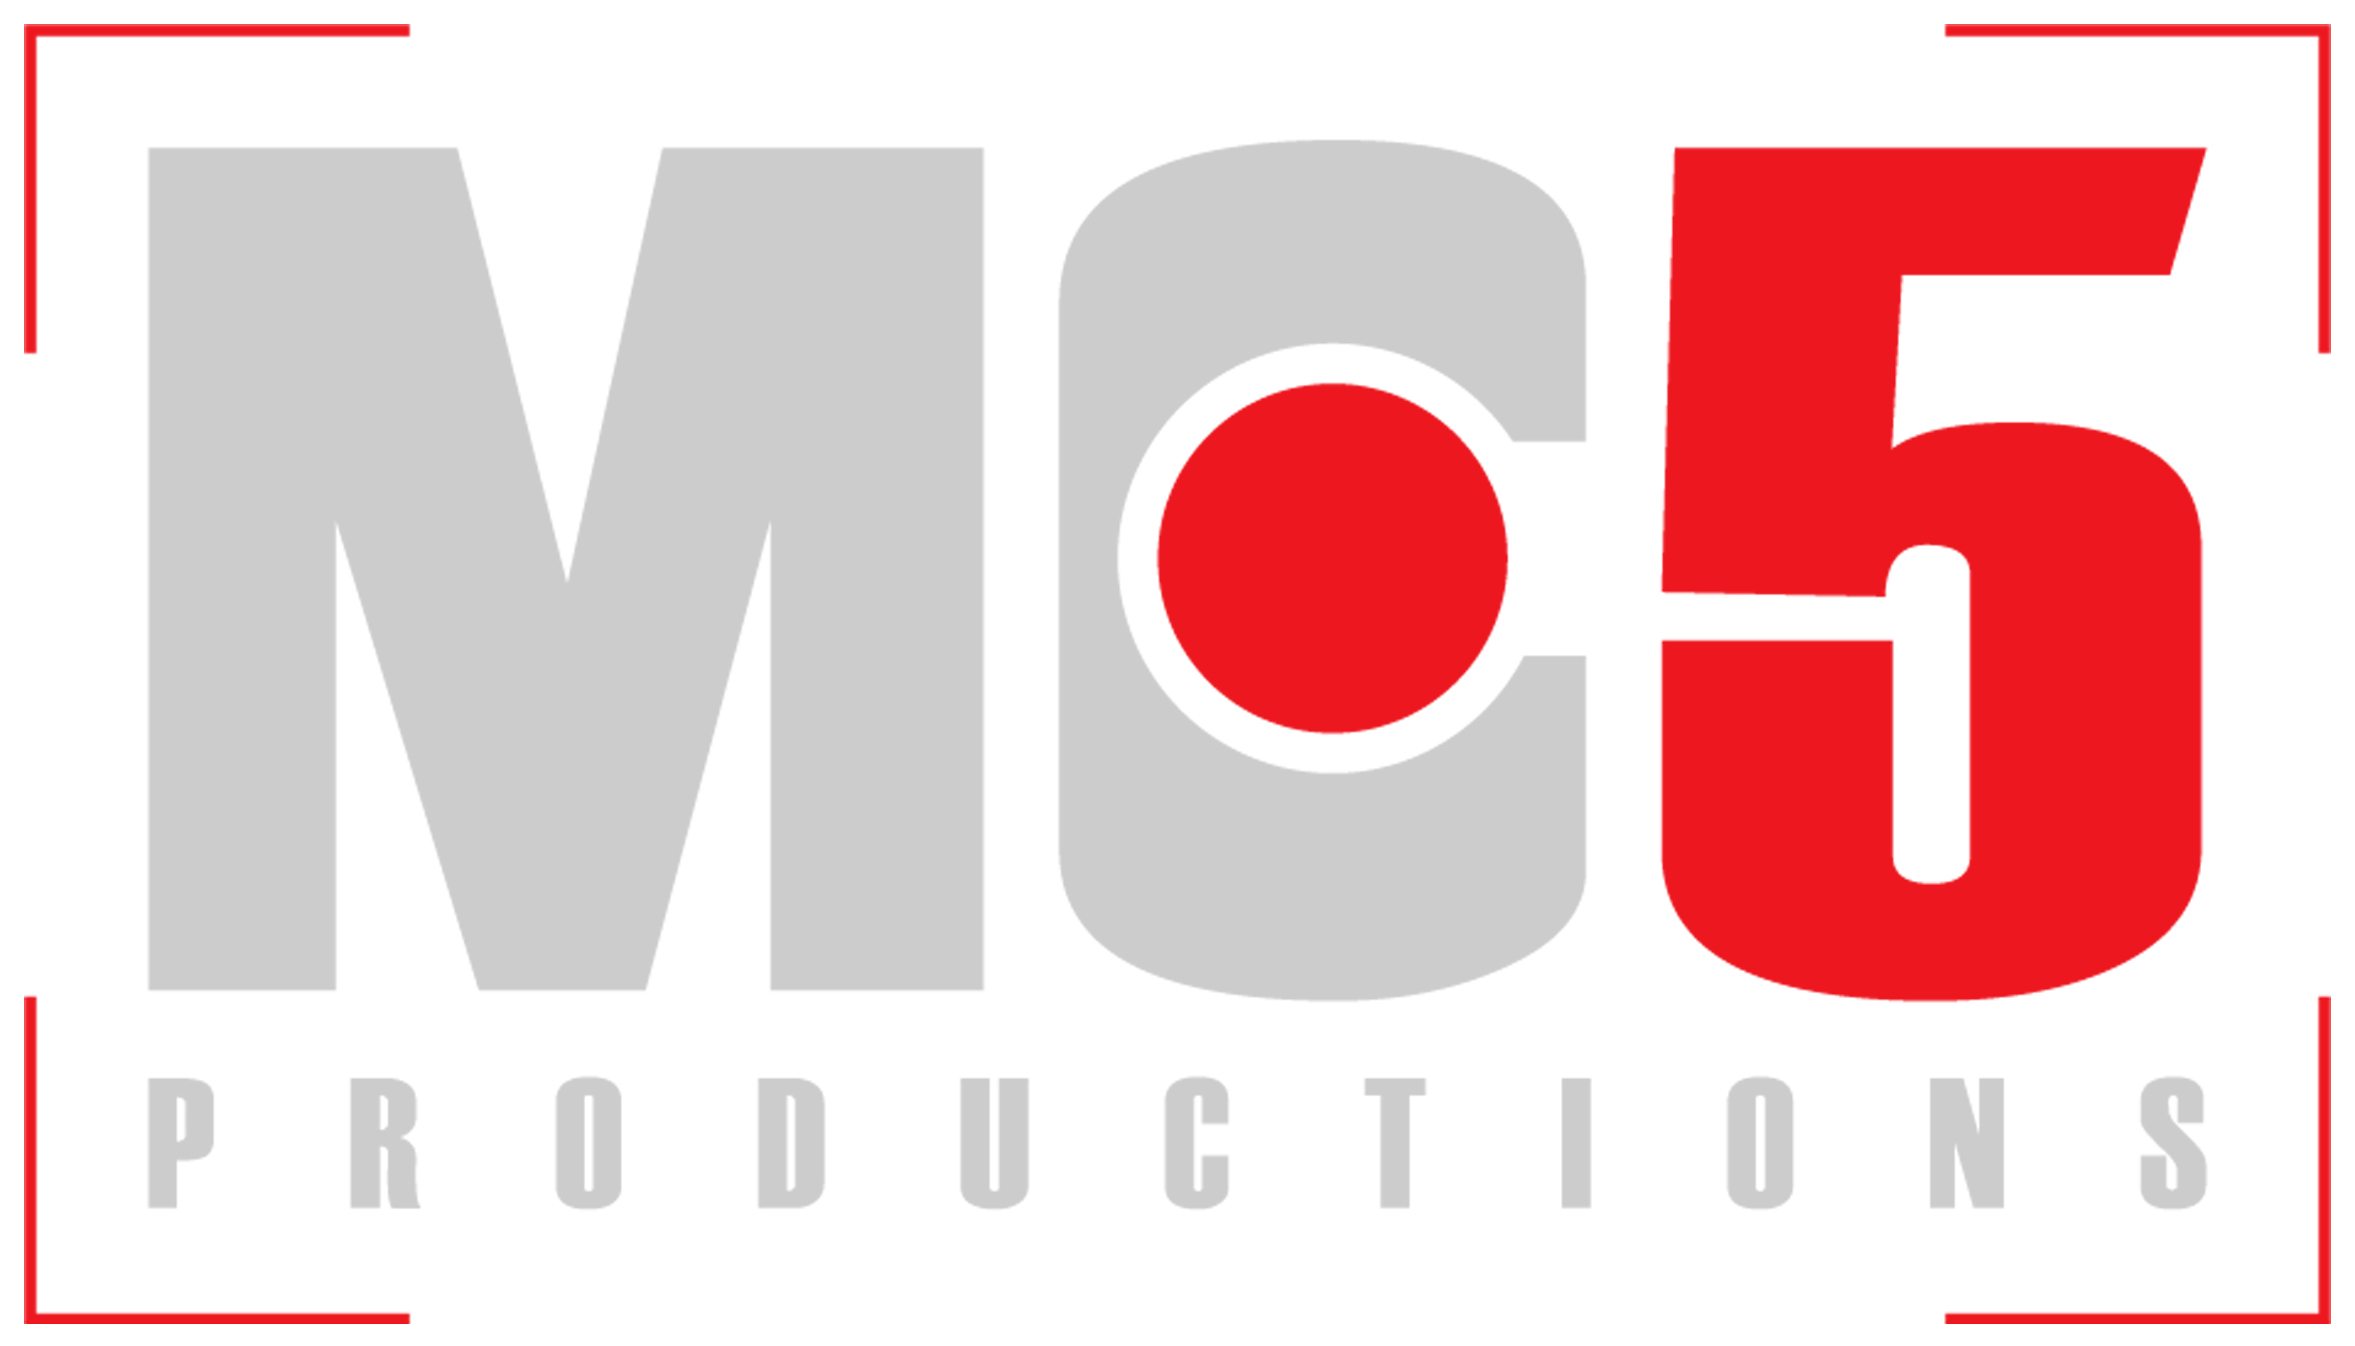 mc5_logos.pdf